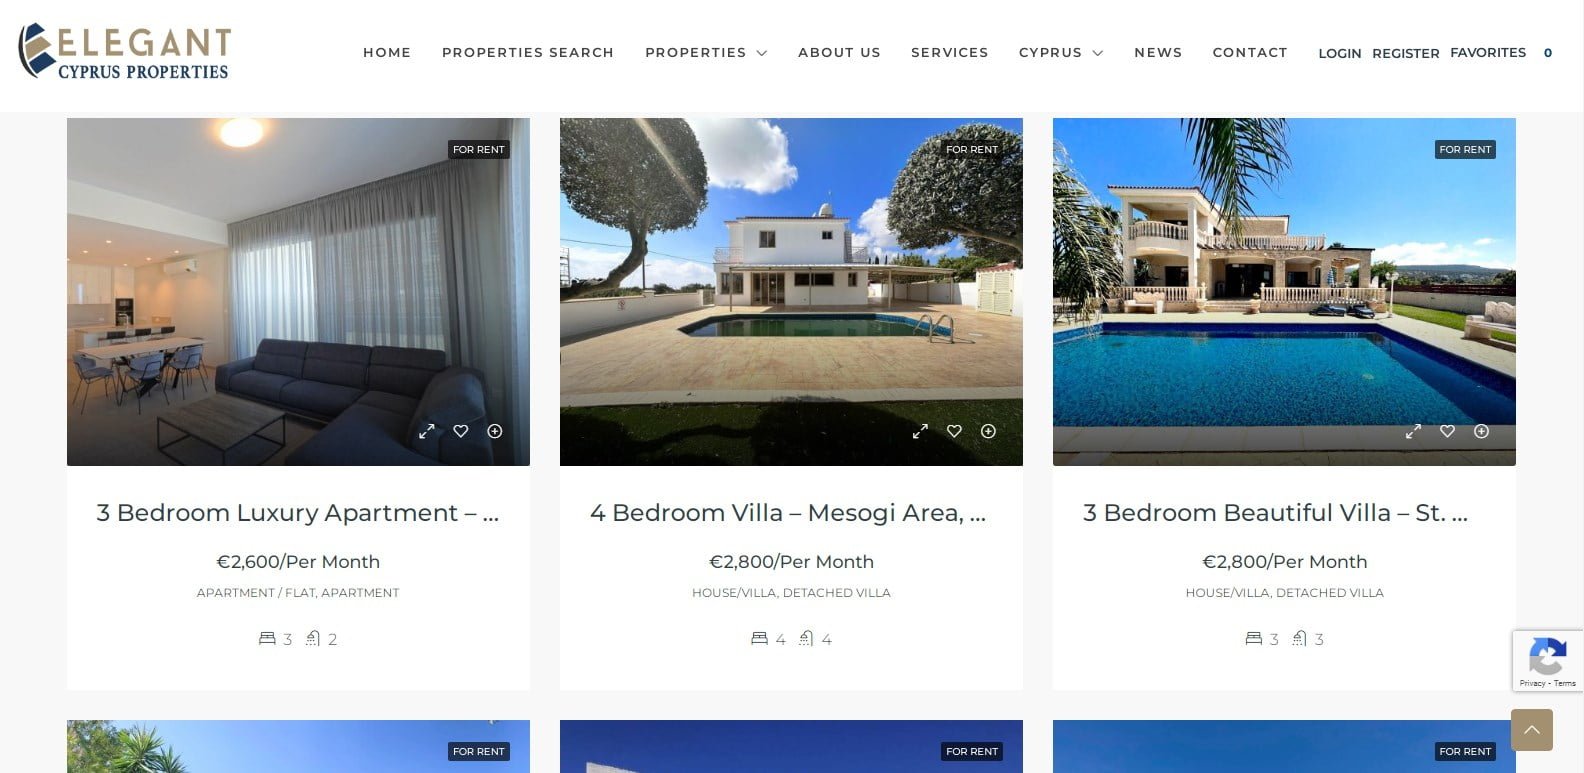 Elegant Cyprus Properties | Web Design | Web Development